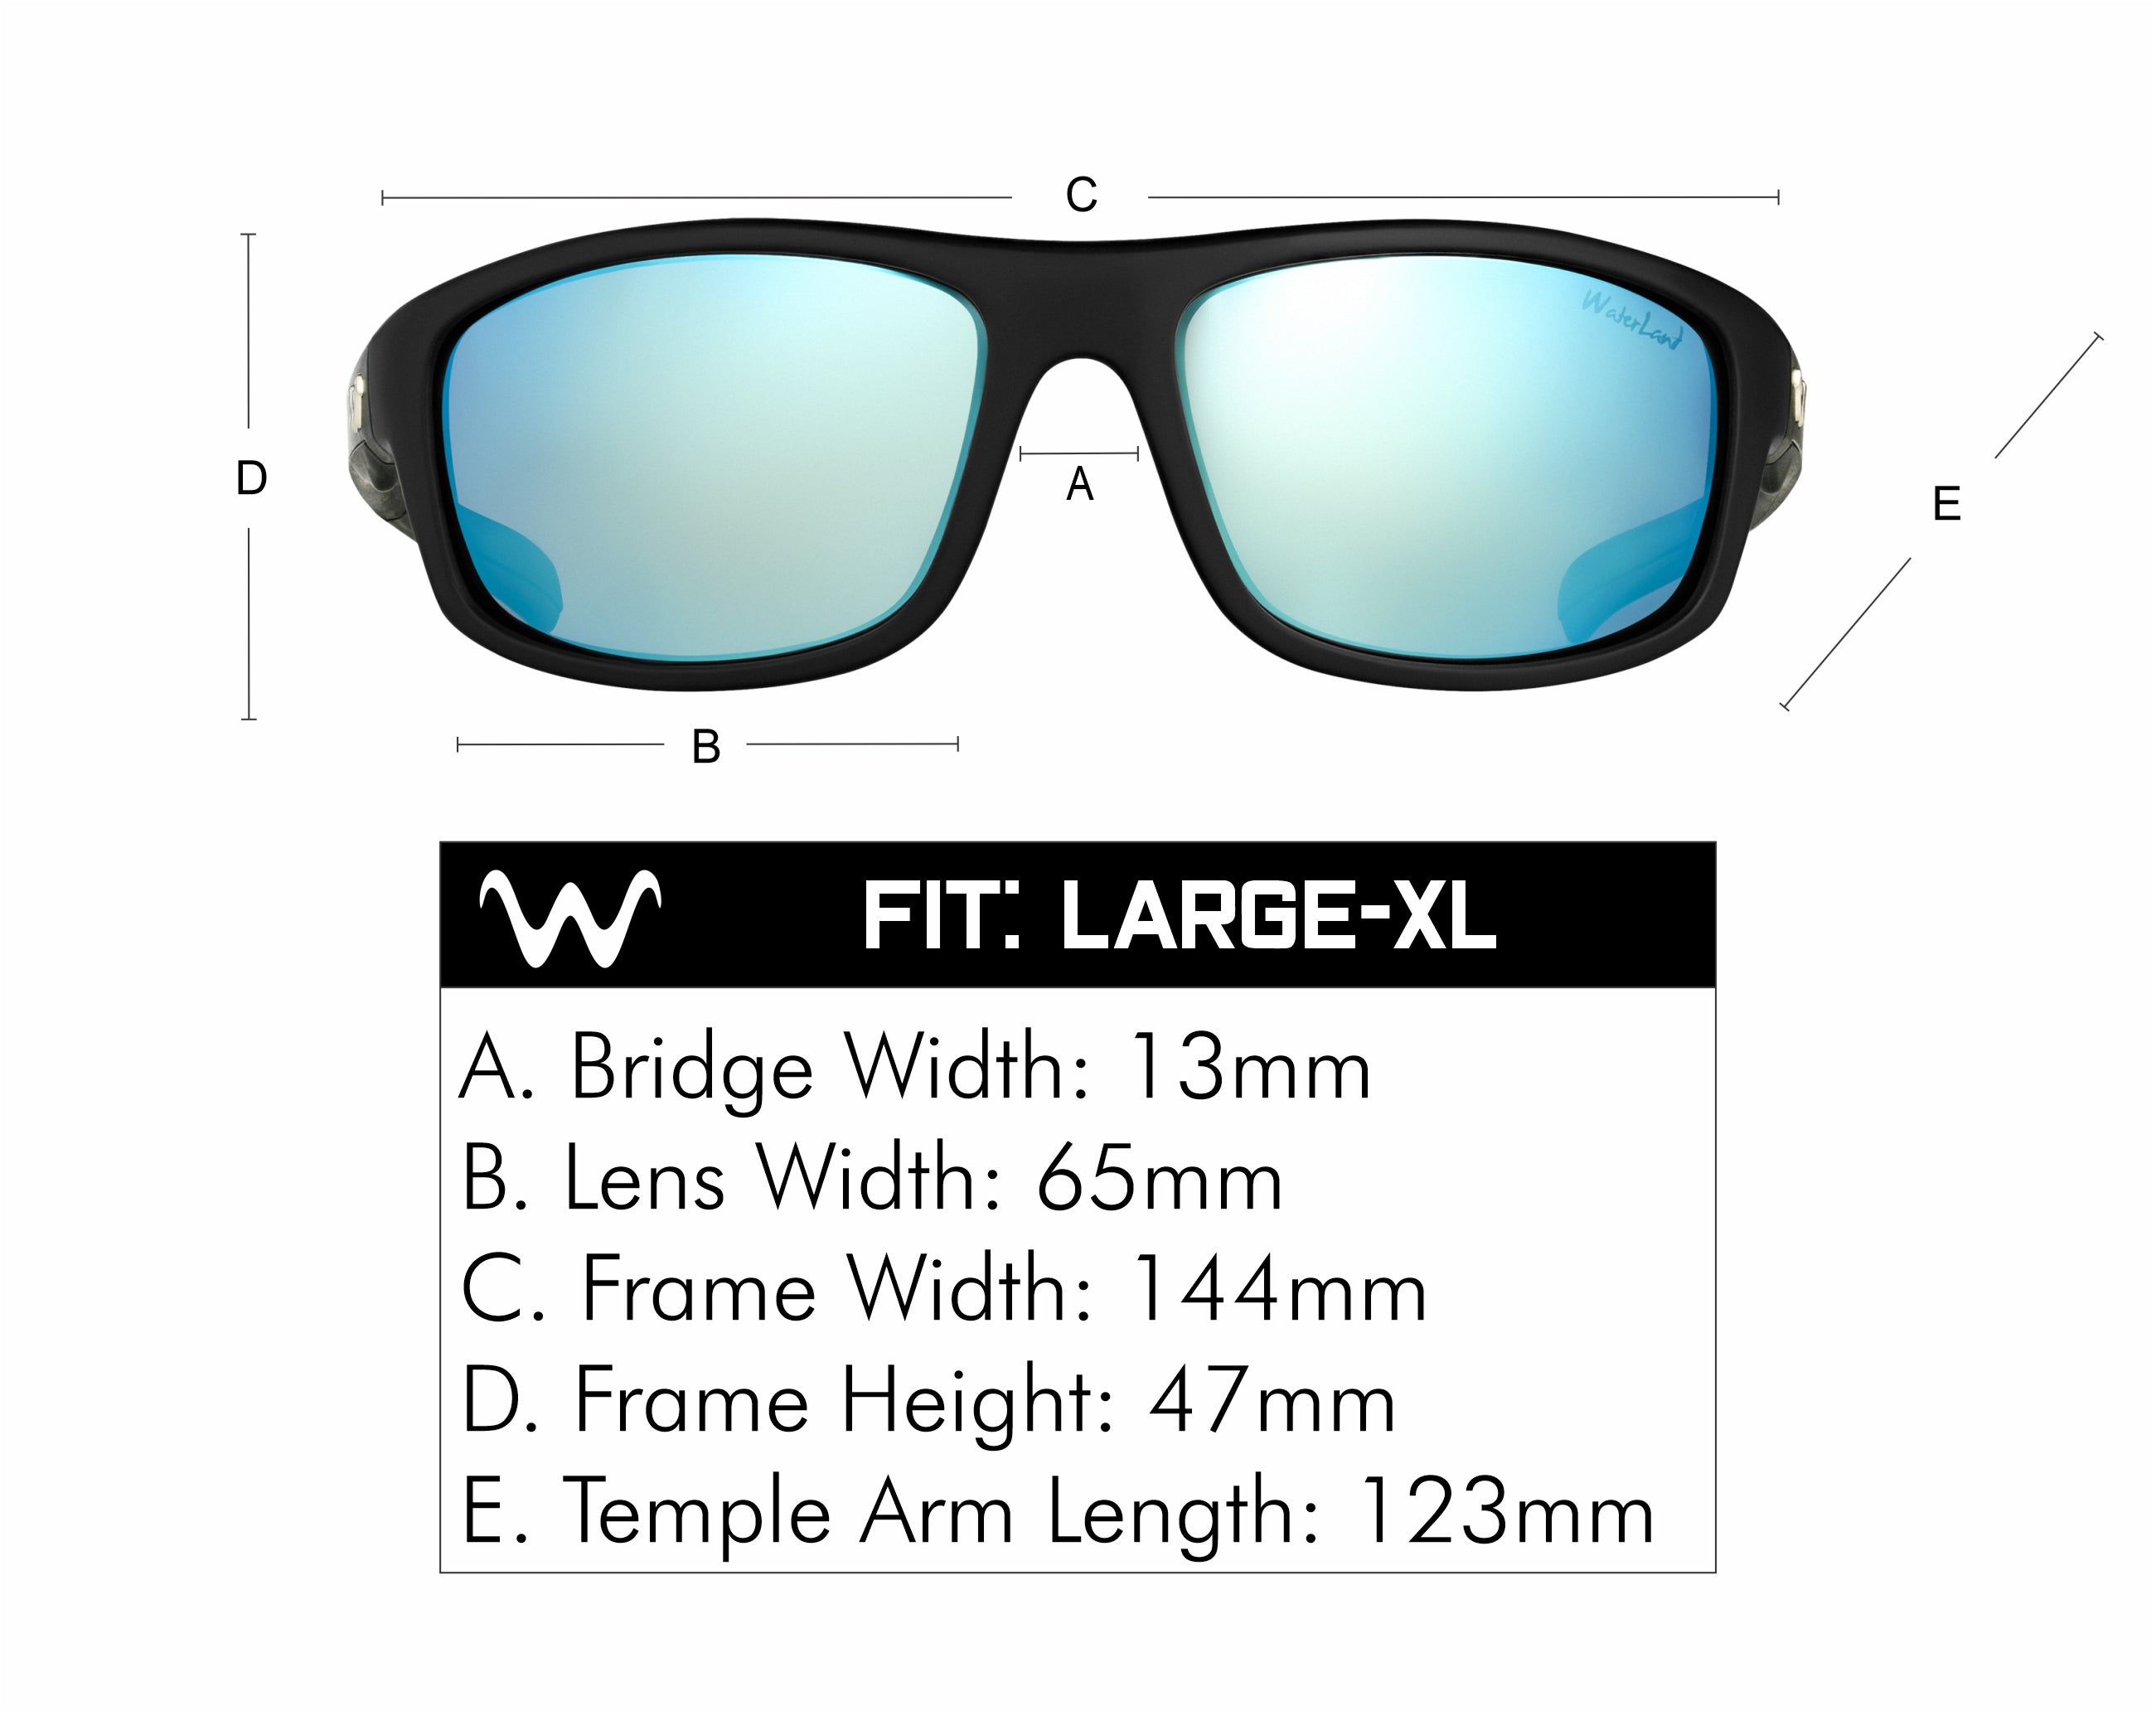 Buy 6th Sense Fishing WaterLand Sunglasses WaterLand Co. - Jeune -  BlackWater Online at Best Price